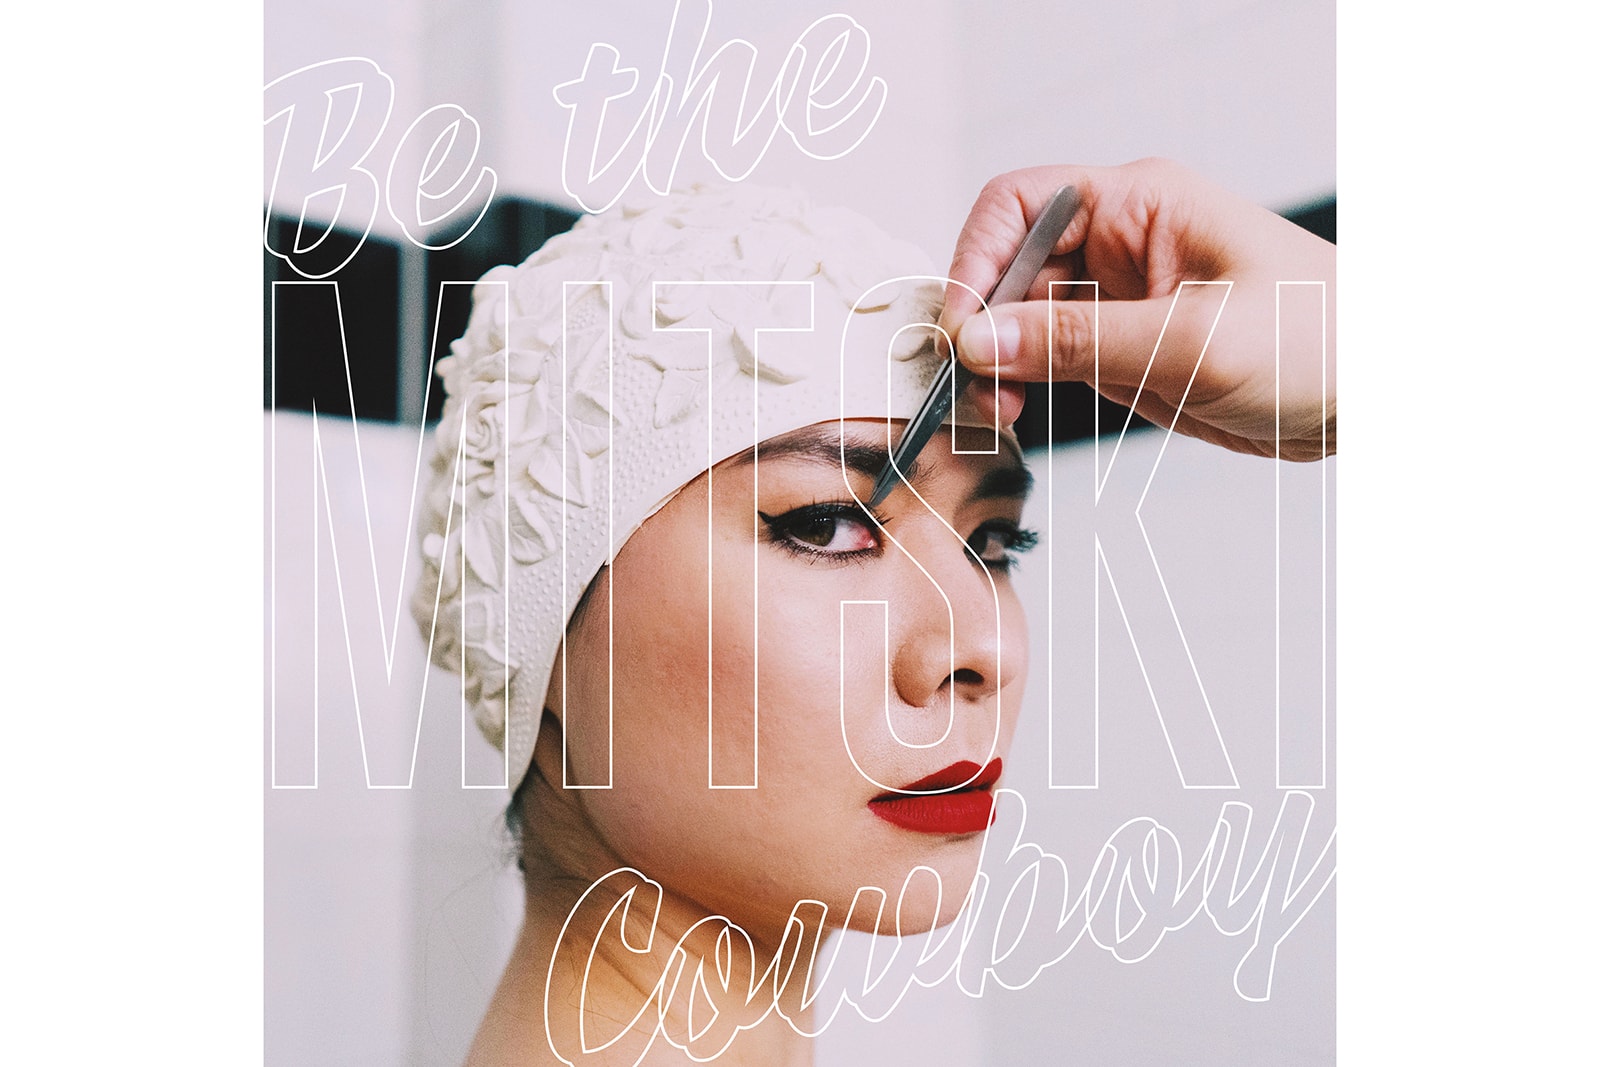 Mitski 'Be The Cowboy' Stream Apple Music Spotify Listen